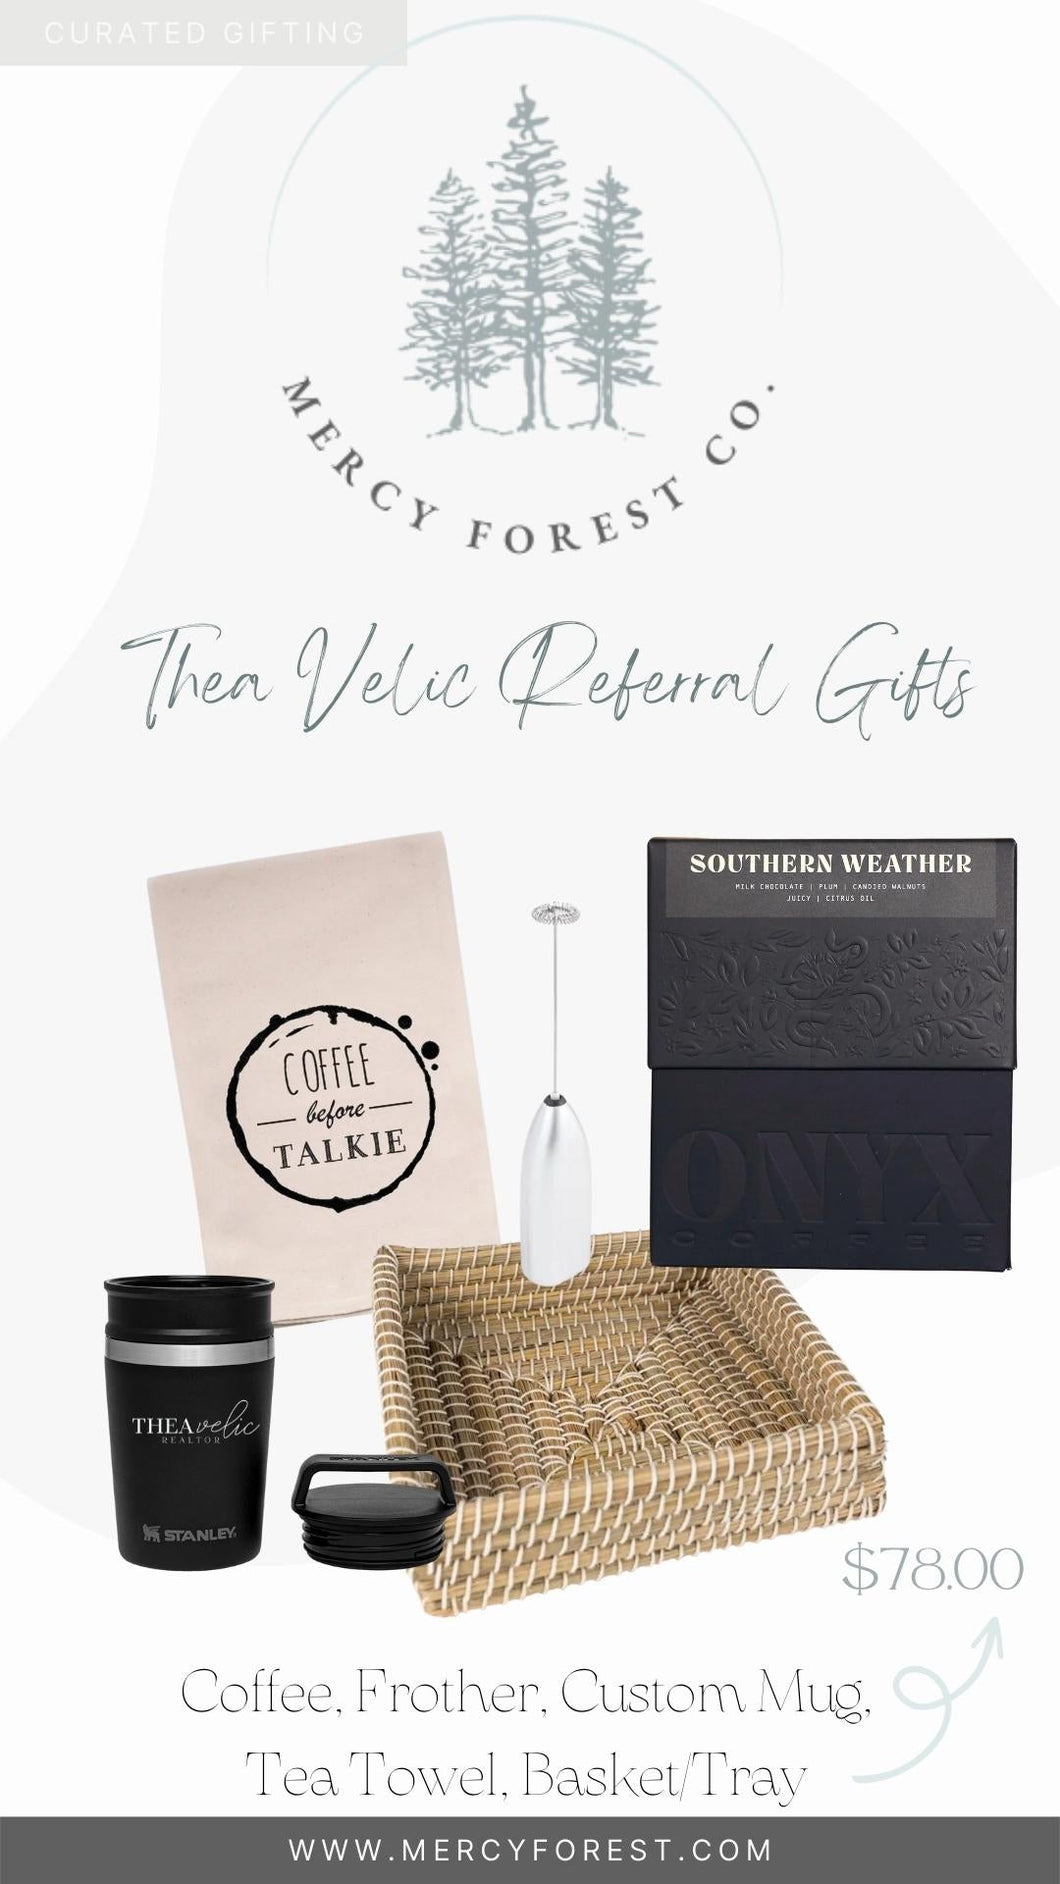 Thea Velic Realty - Custom Referral Gift Box (invoice)